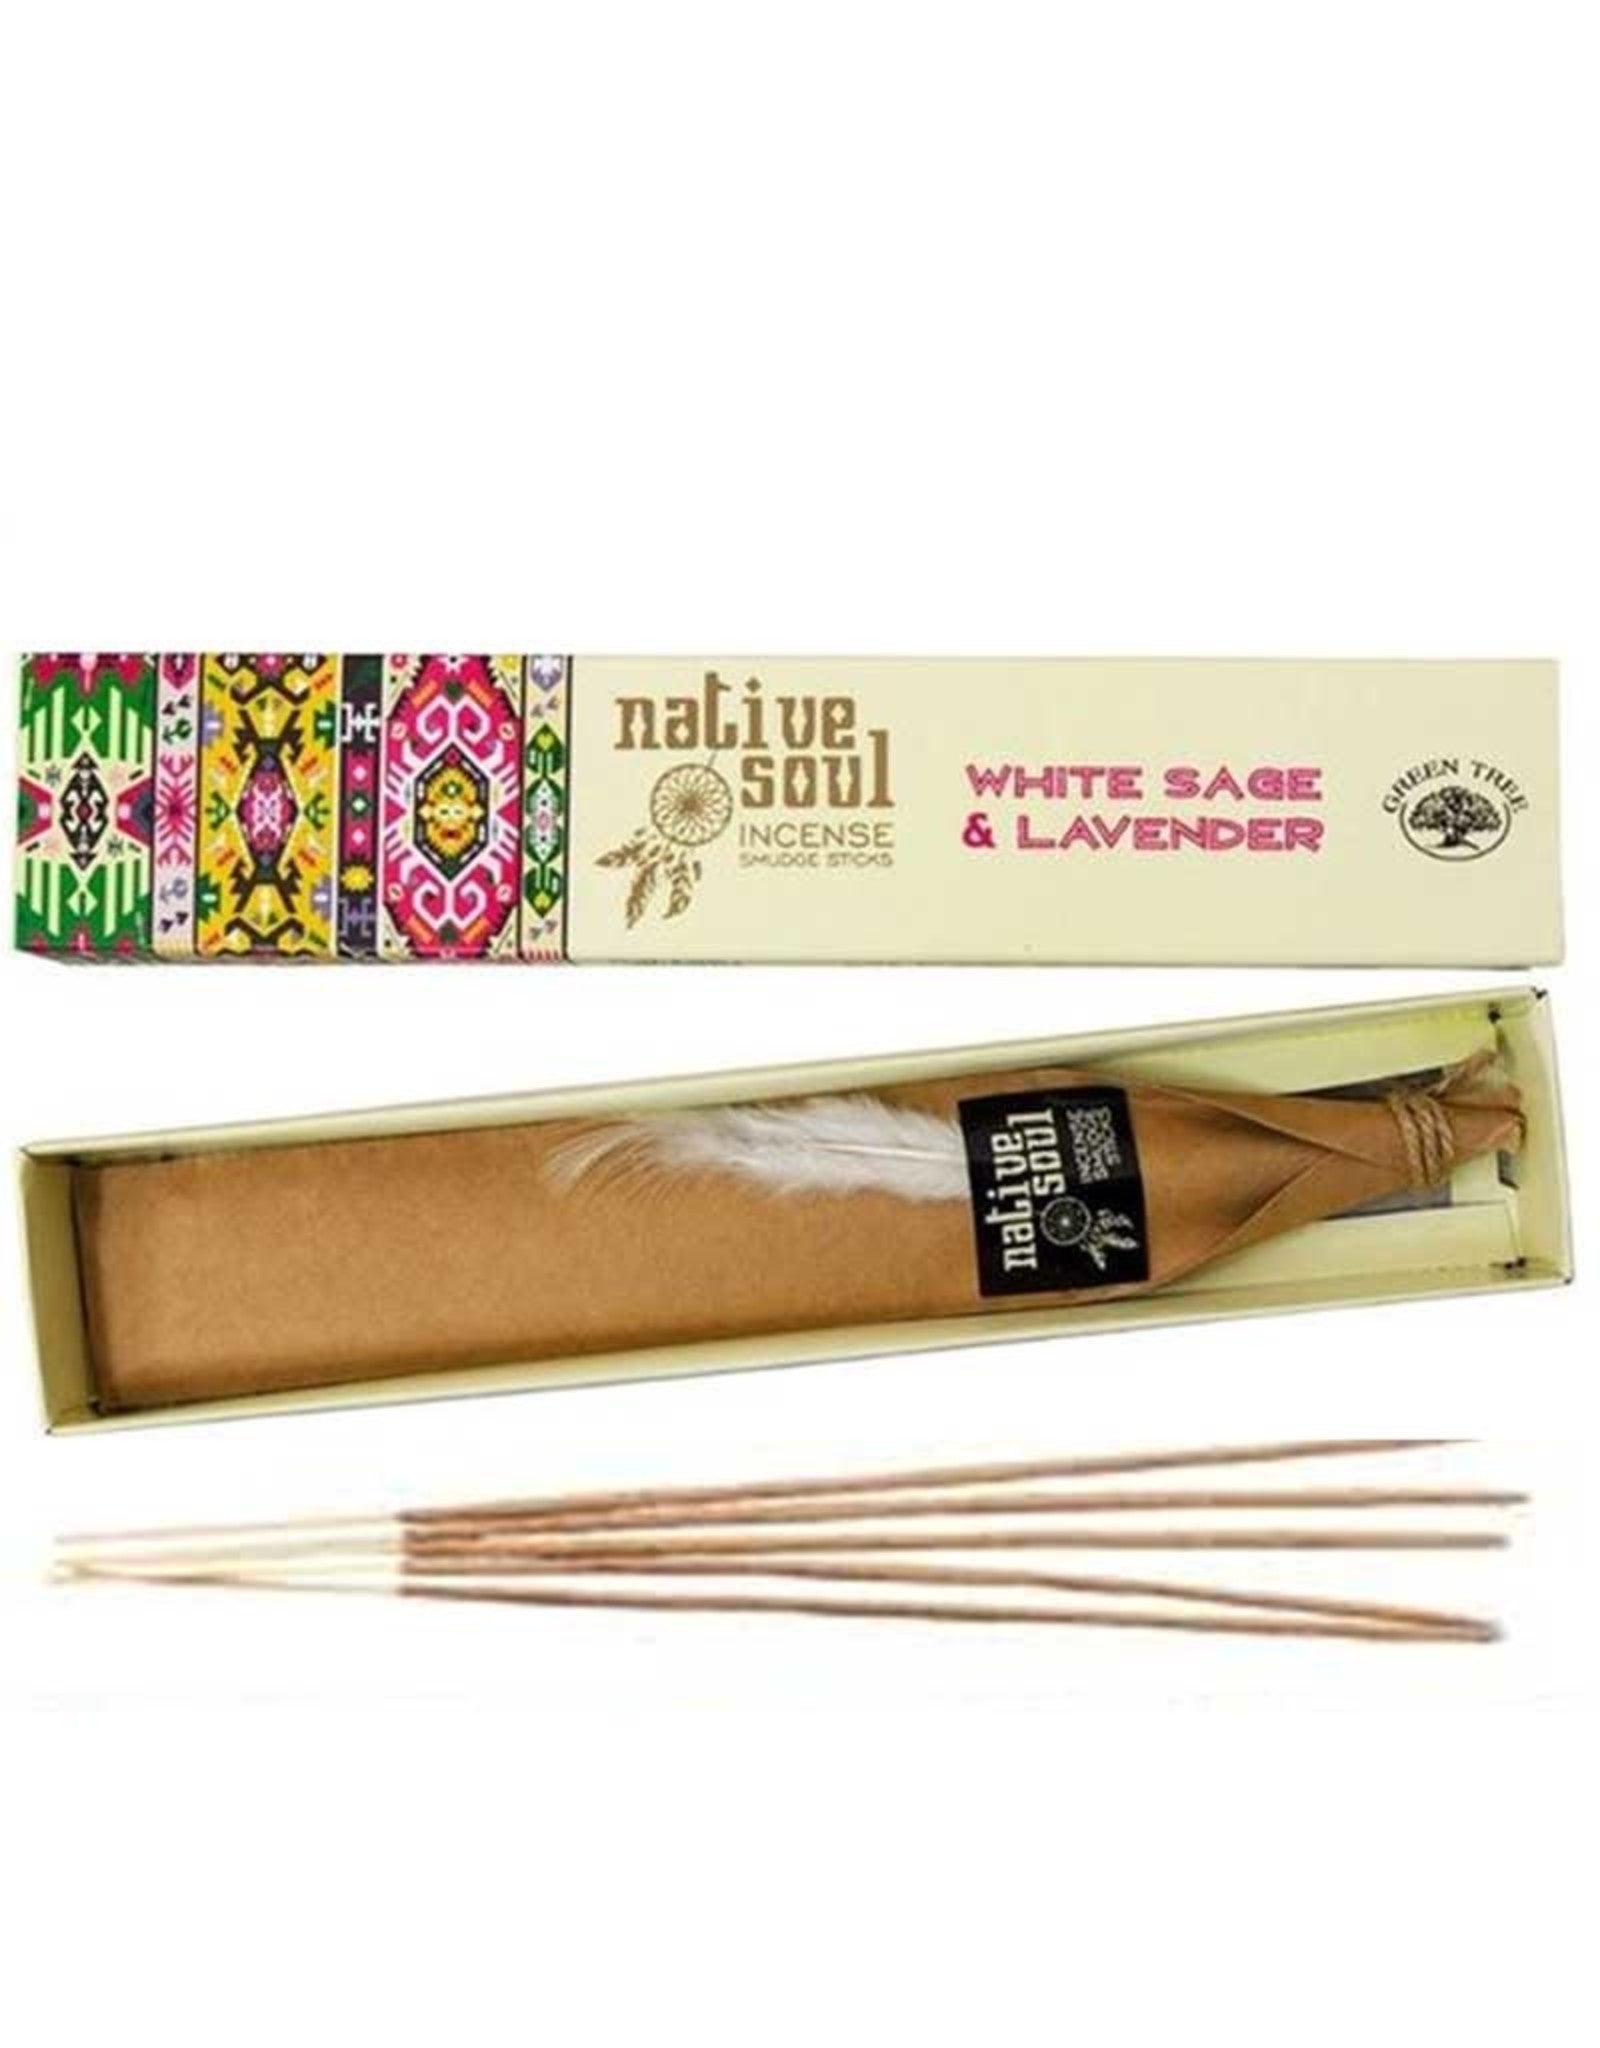 Green Tree White Sage and Lavender Native Soul Incense Smudge Sticks - 1 Box